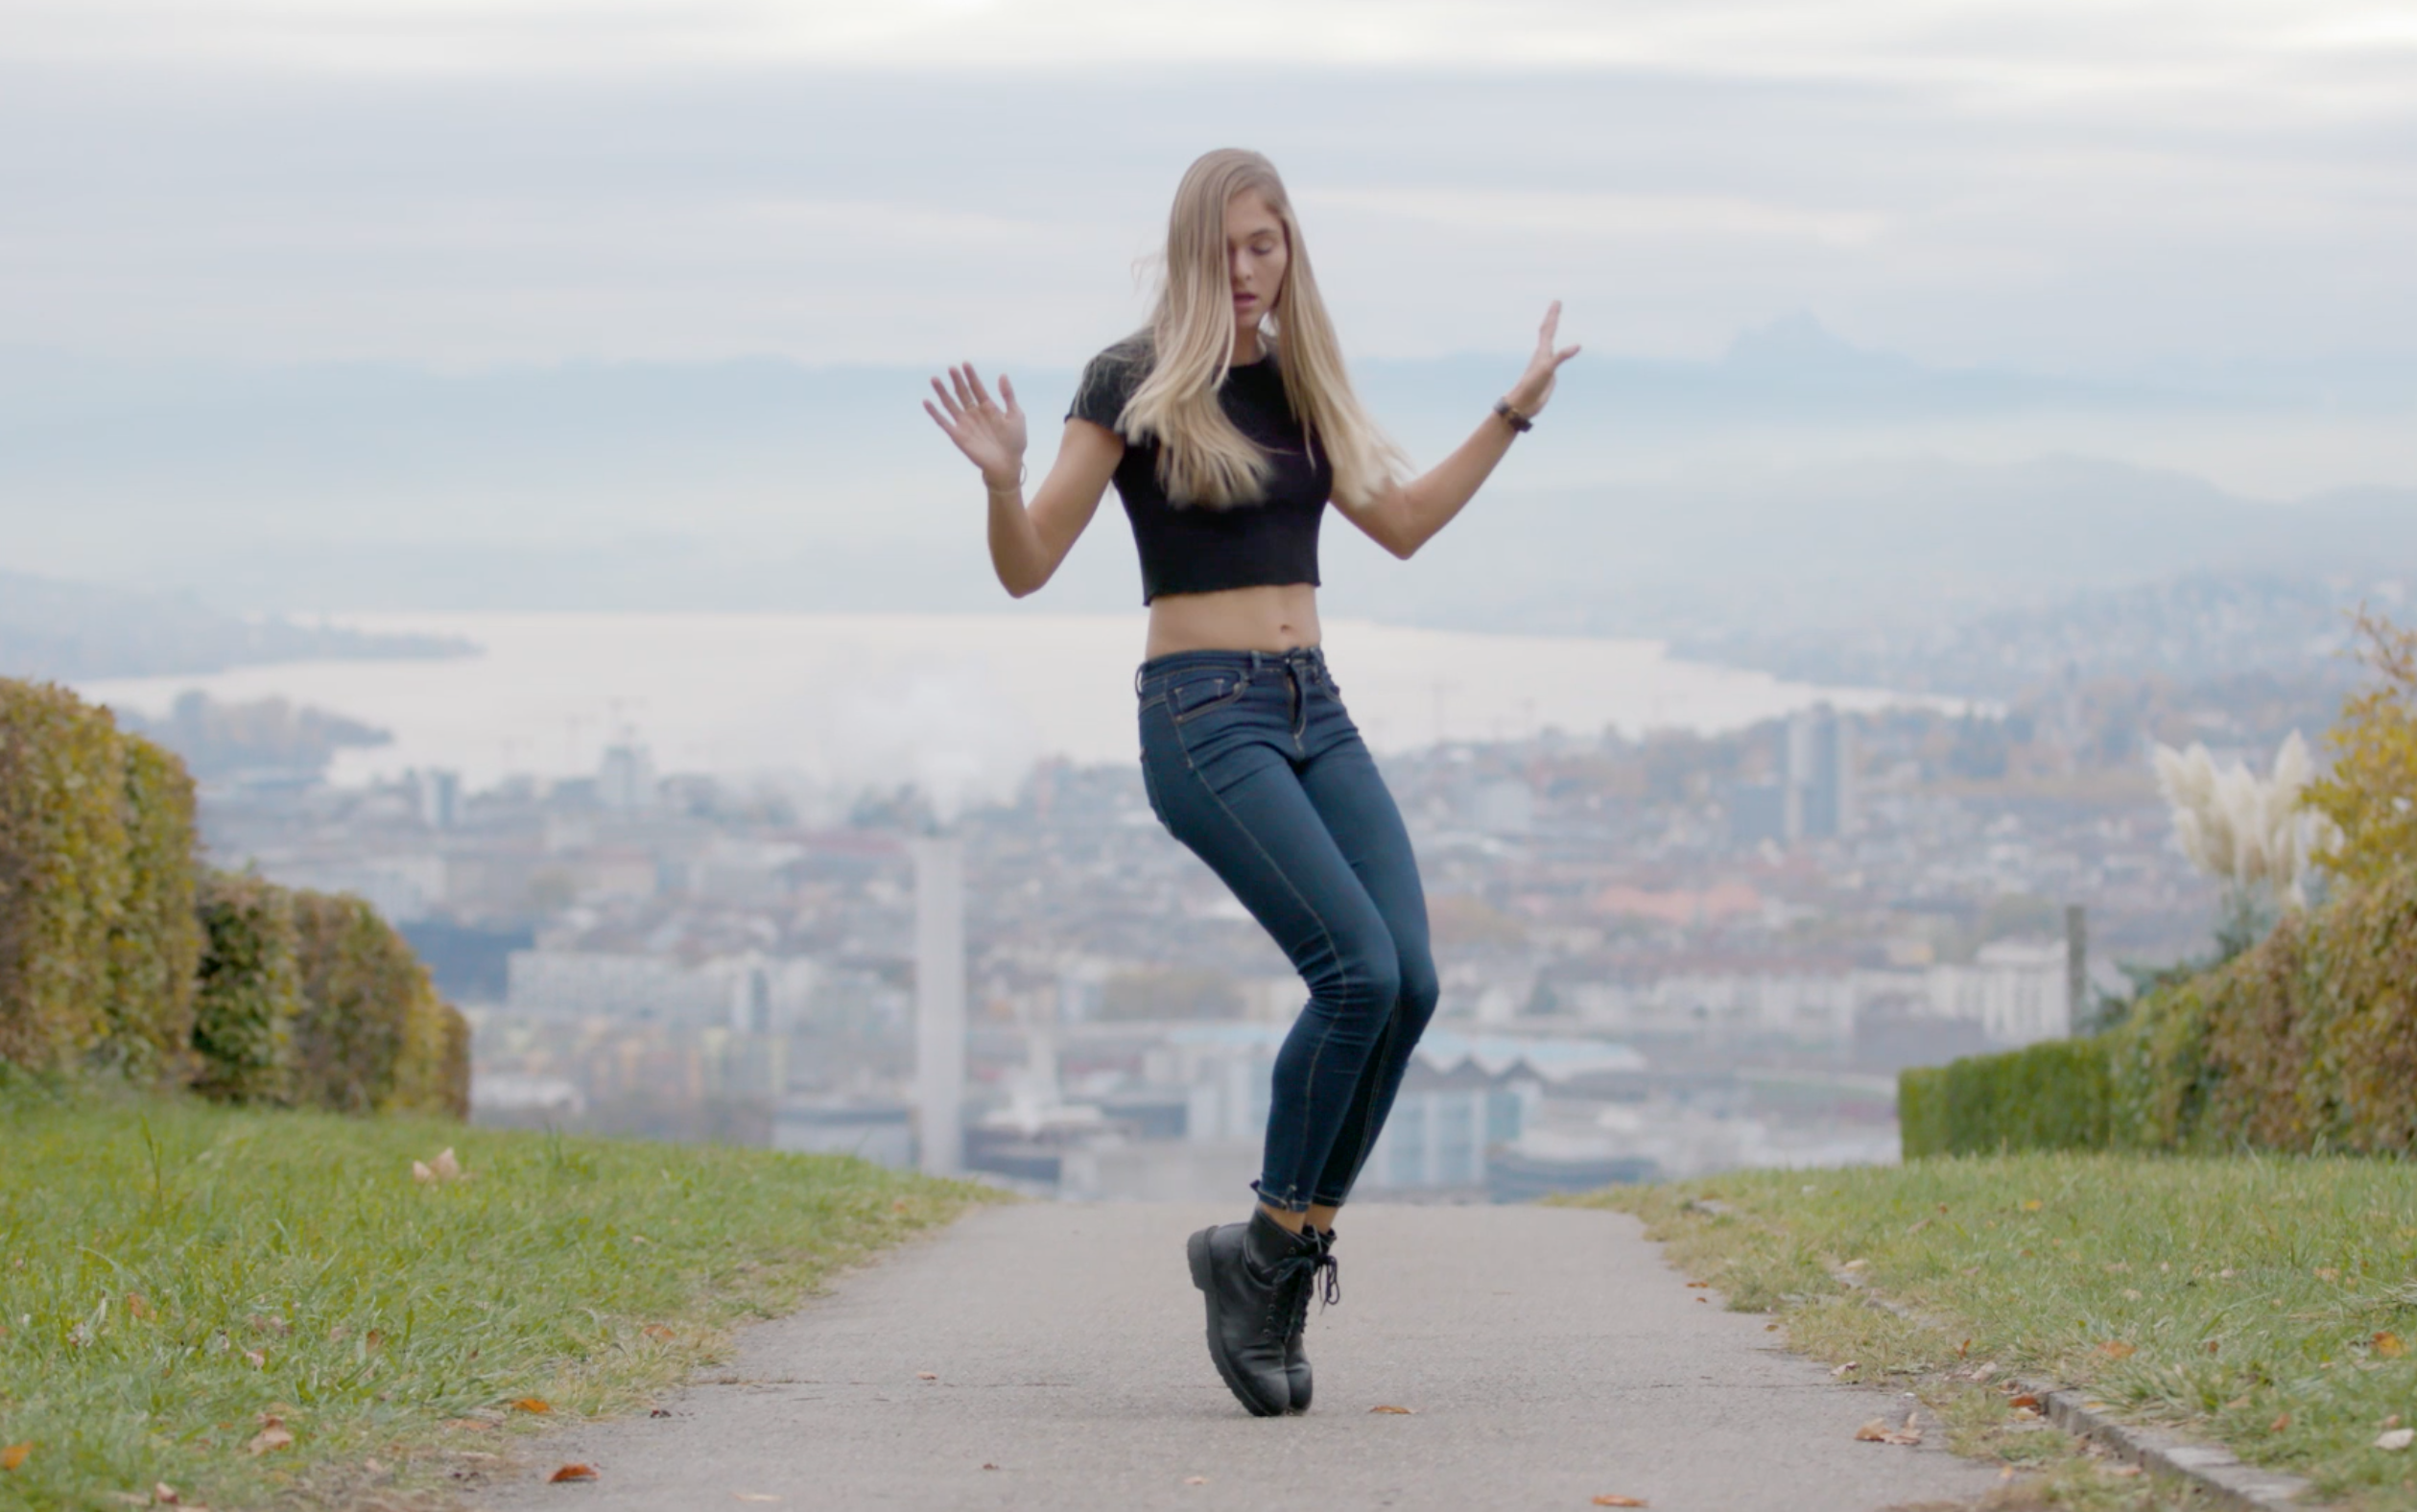 Shuffle Dance Video Model Arina Photographer Armin Nussbaumer